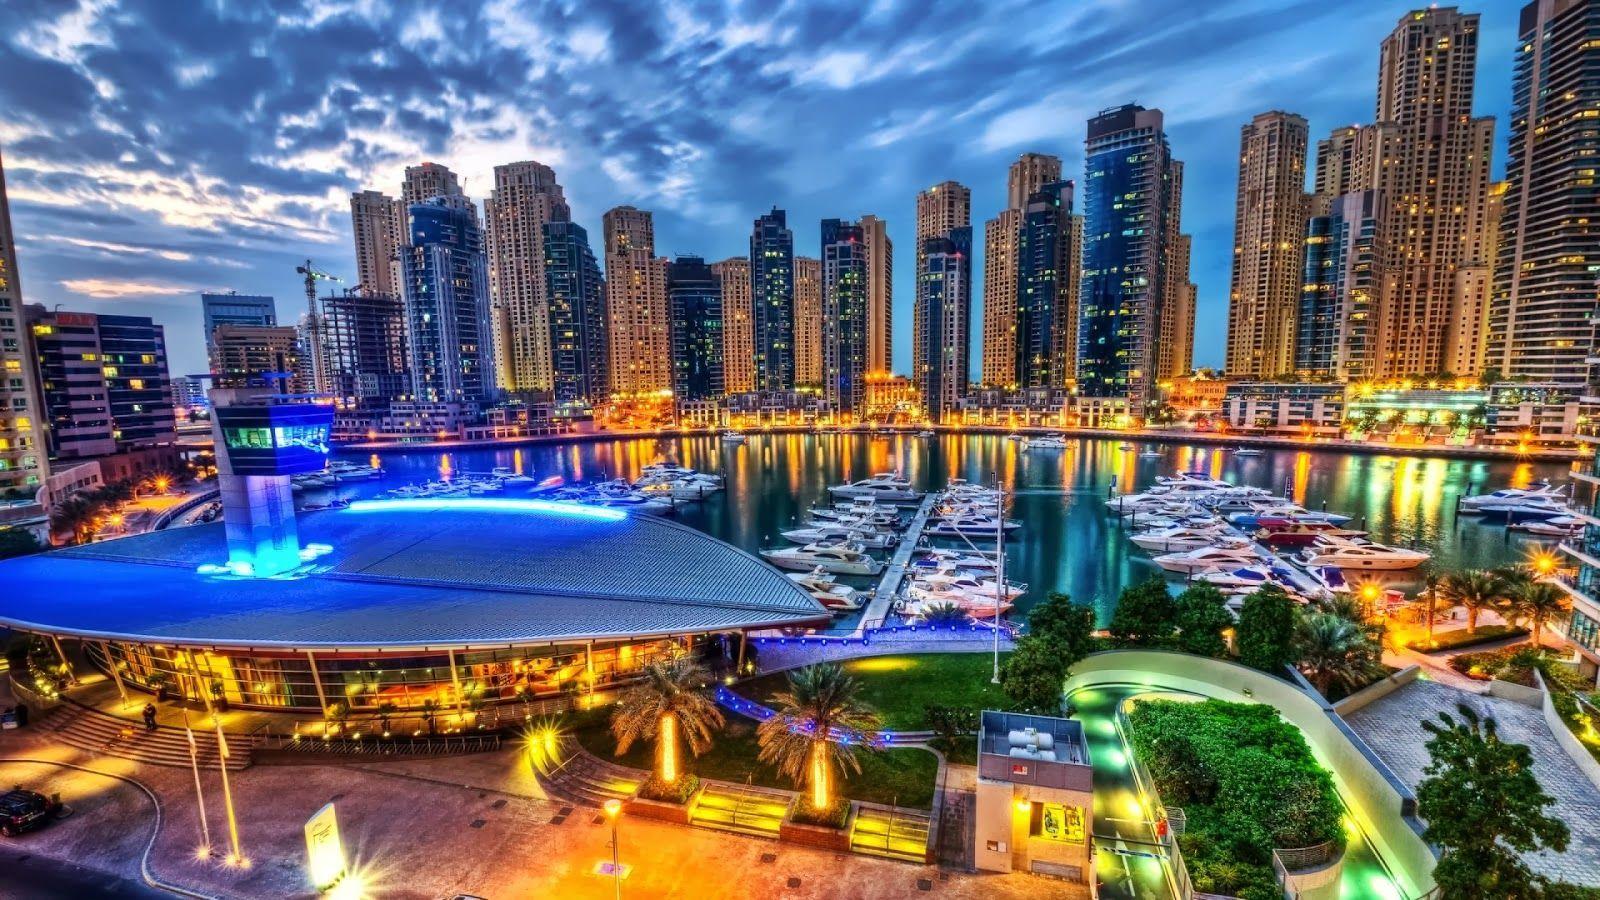 HD WALLPAPERS: Download Dubai City HD Wallpaper 1080p. Dubai